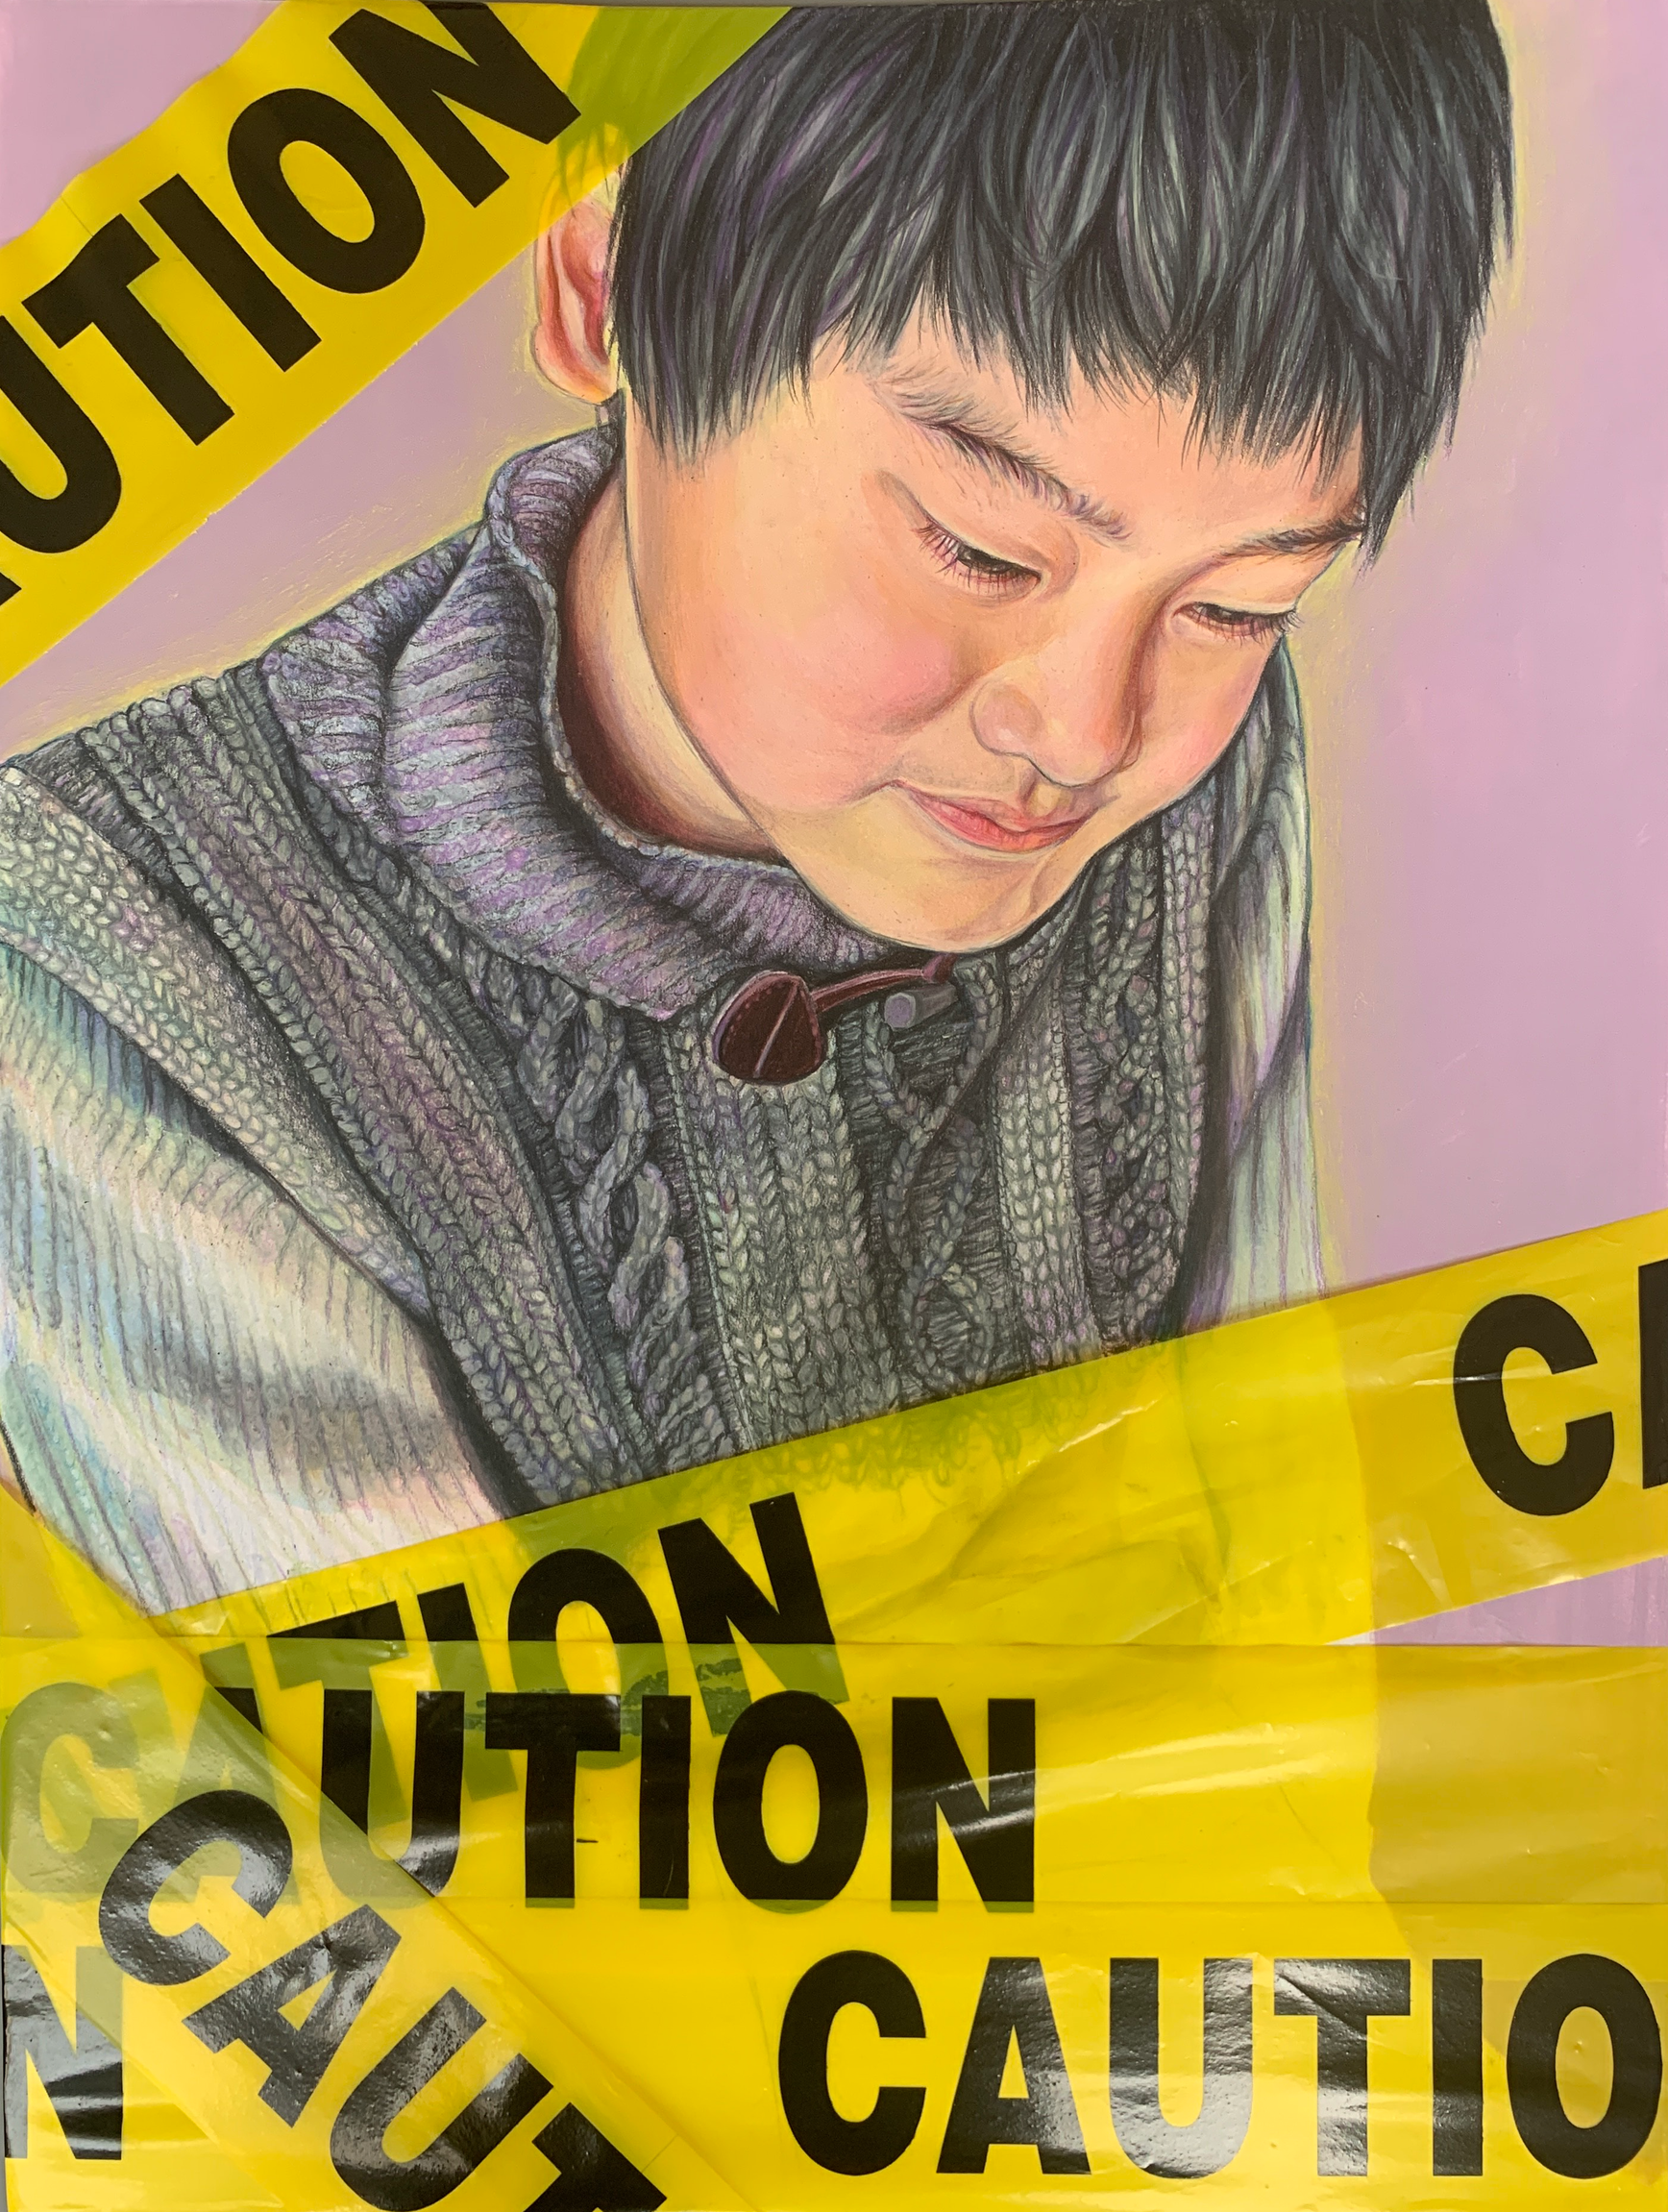 Color pencil portrait wrapped in caution tape